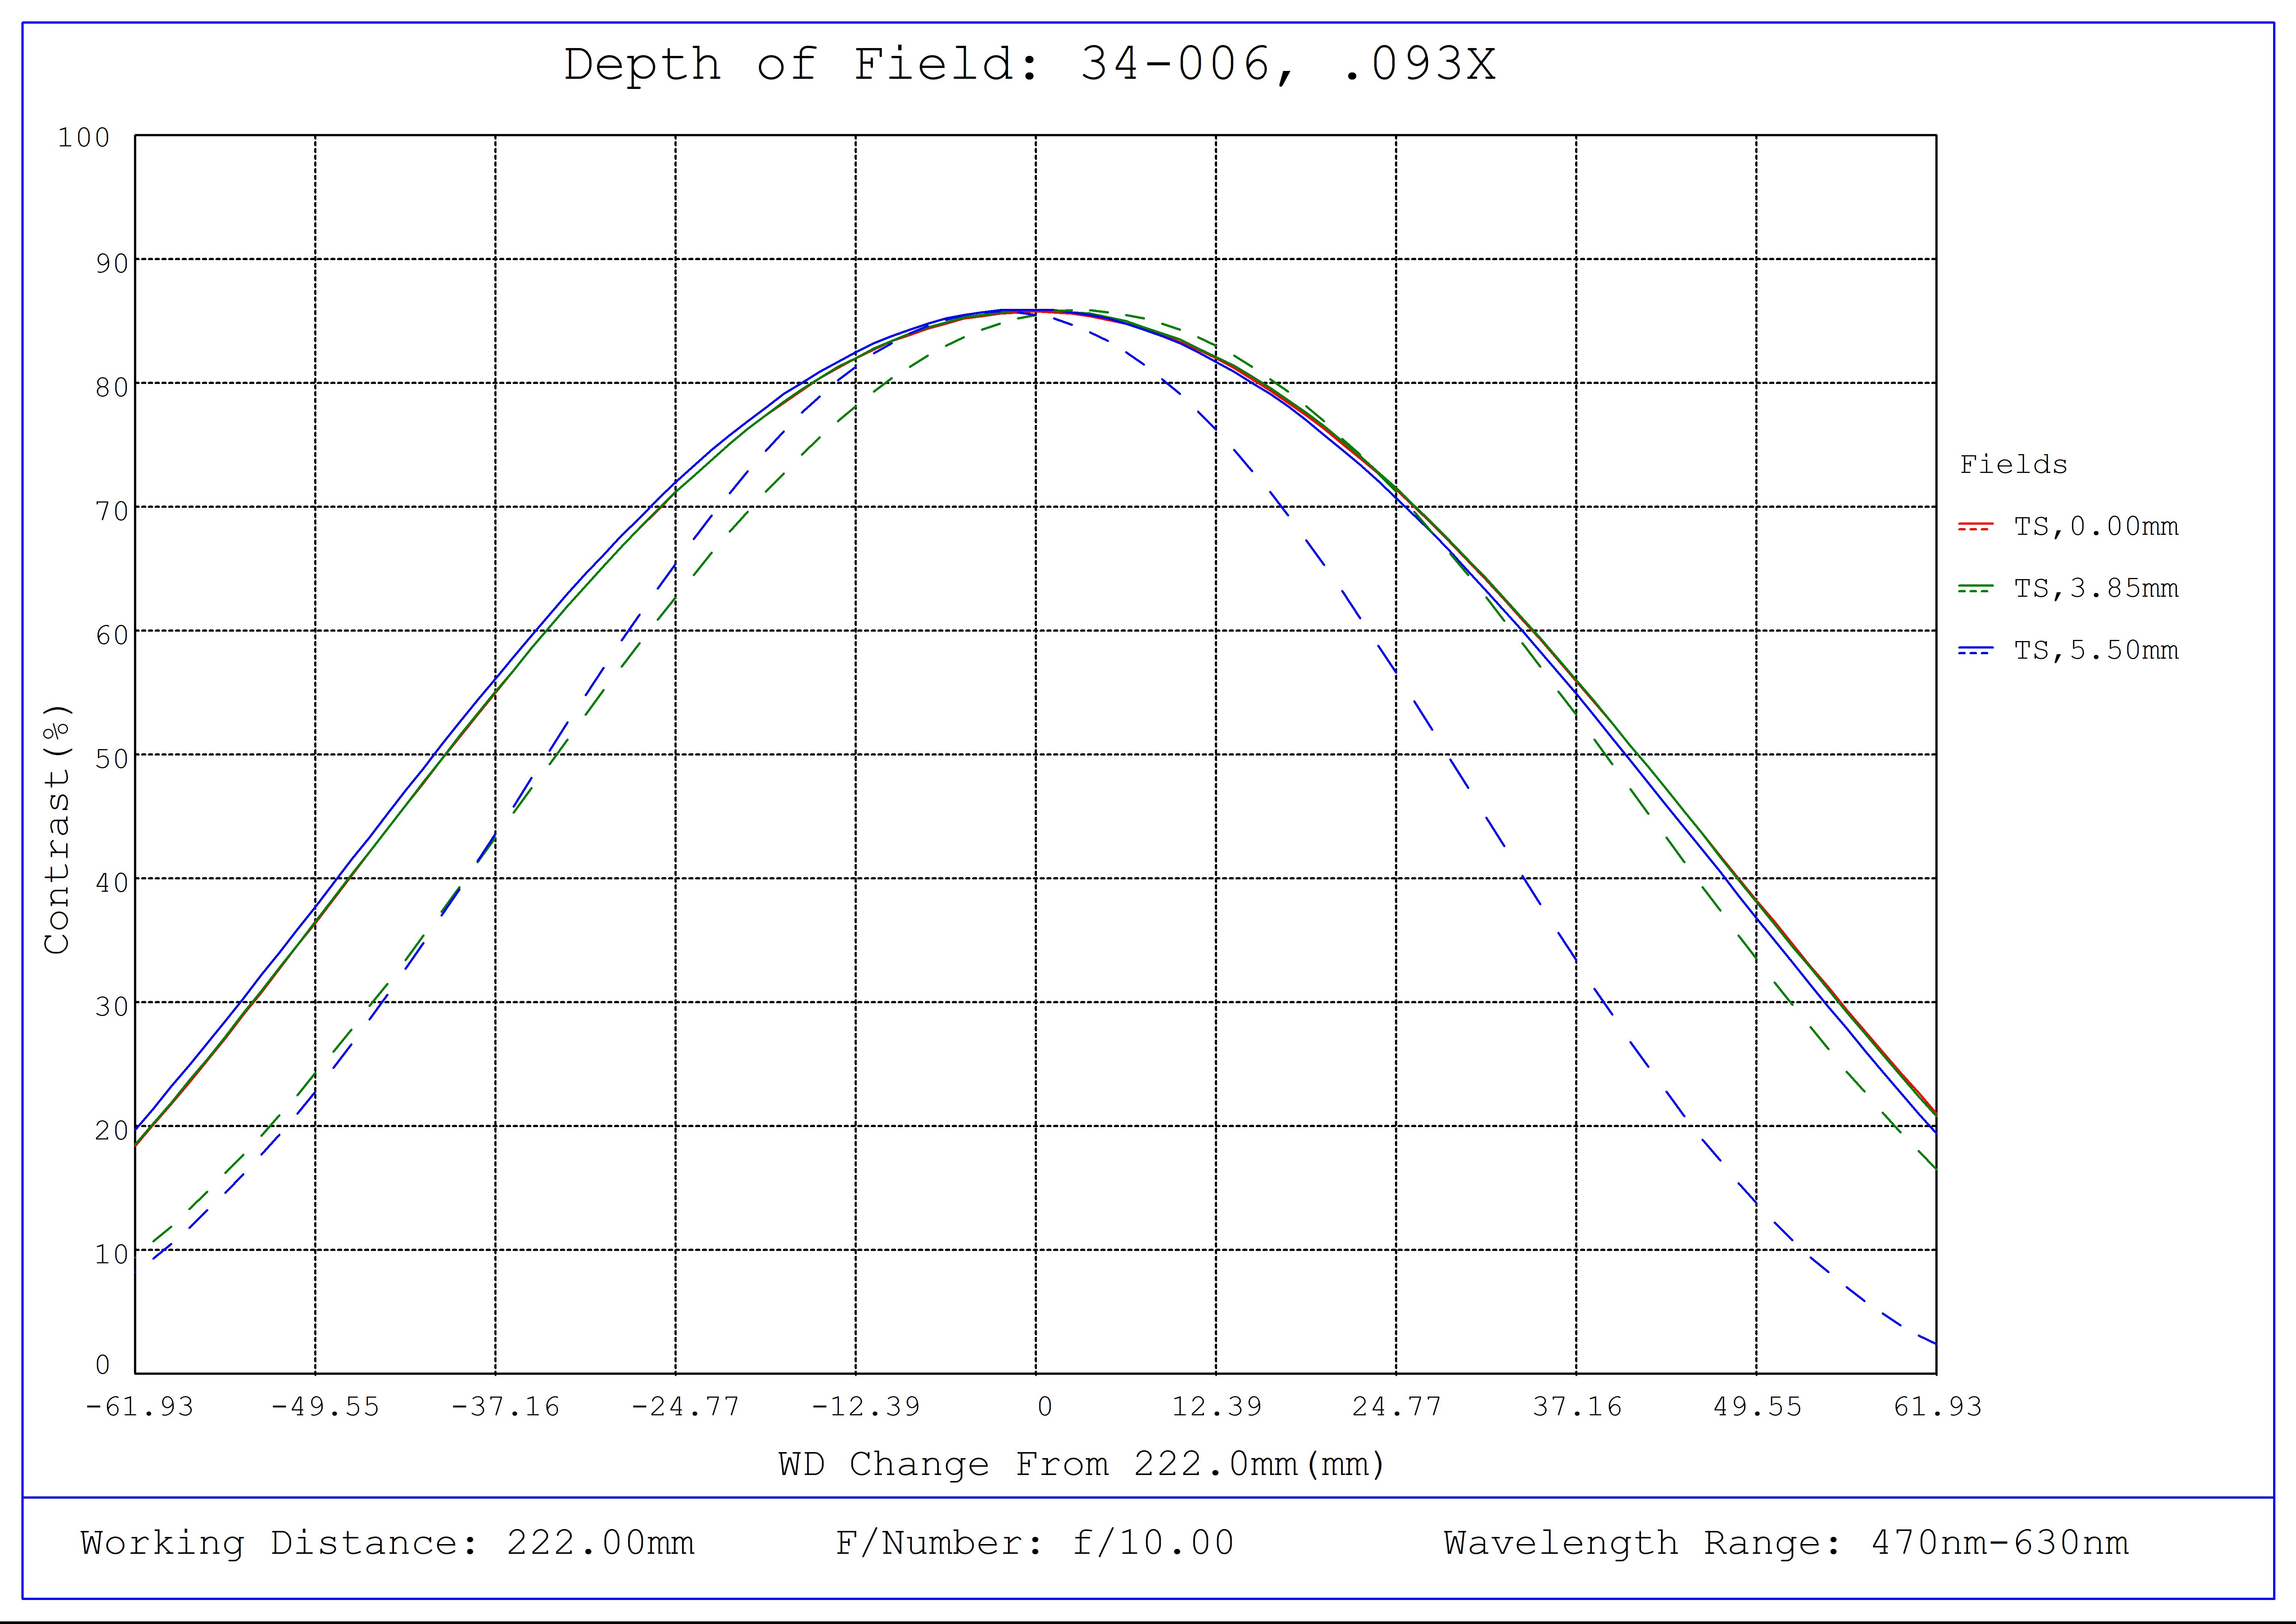 #34-006, 0.093X, 2/3" C-Mount TitanTL® Telecentric Lens, Depth of Field Plot, 222mm Working Distance, f10